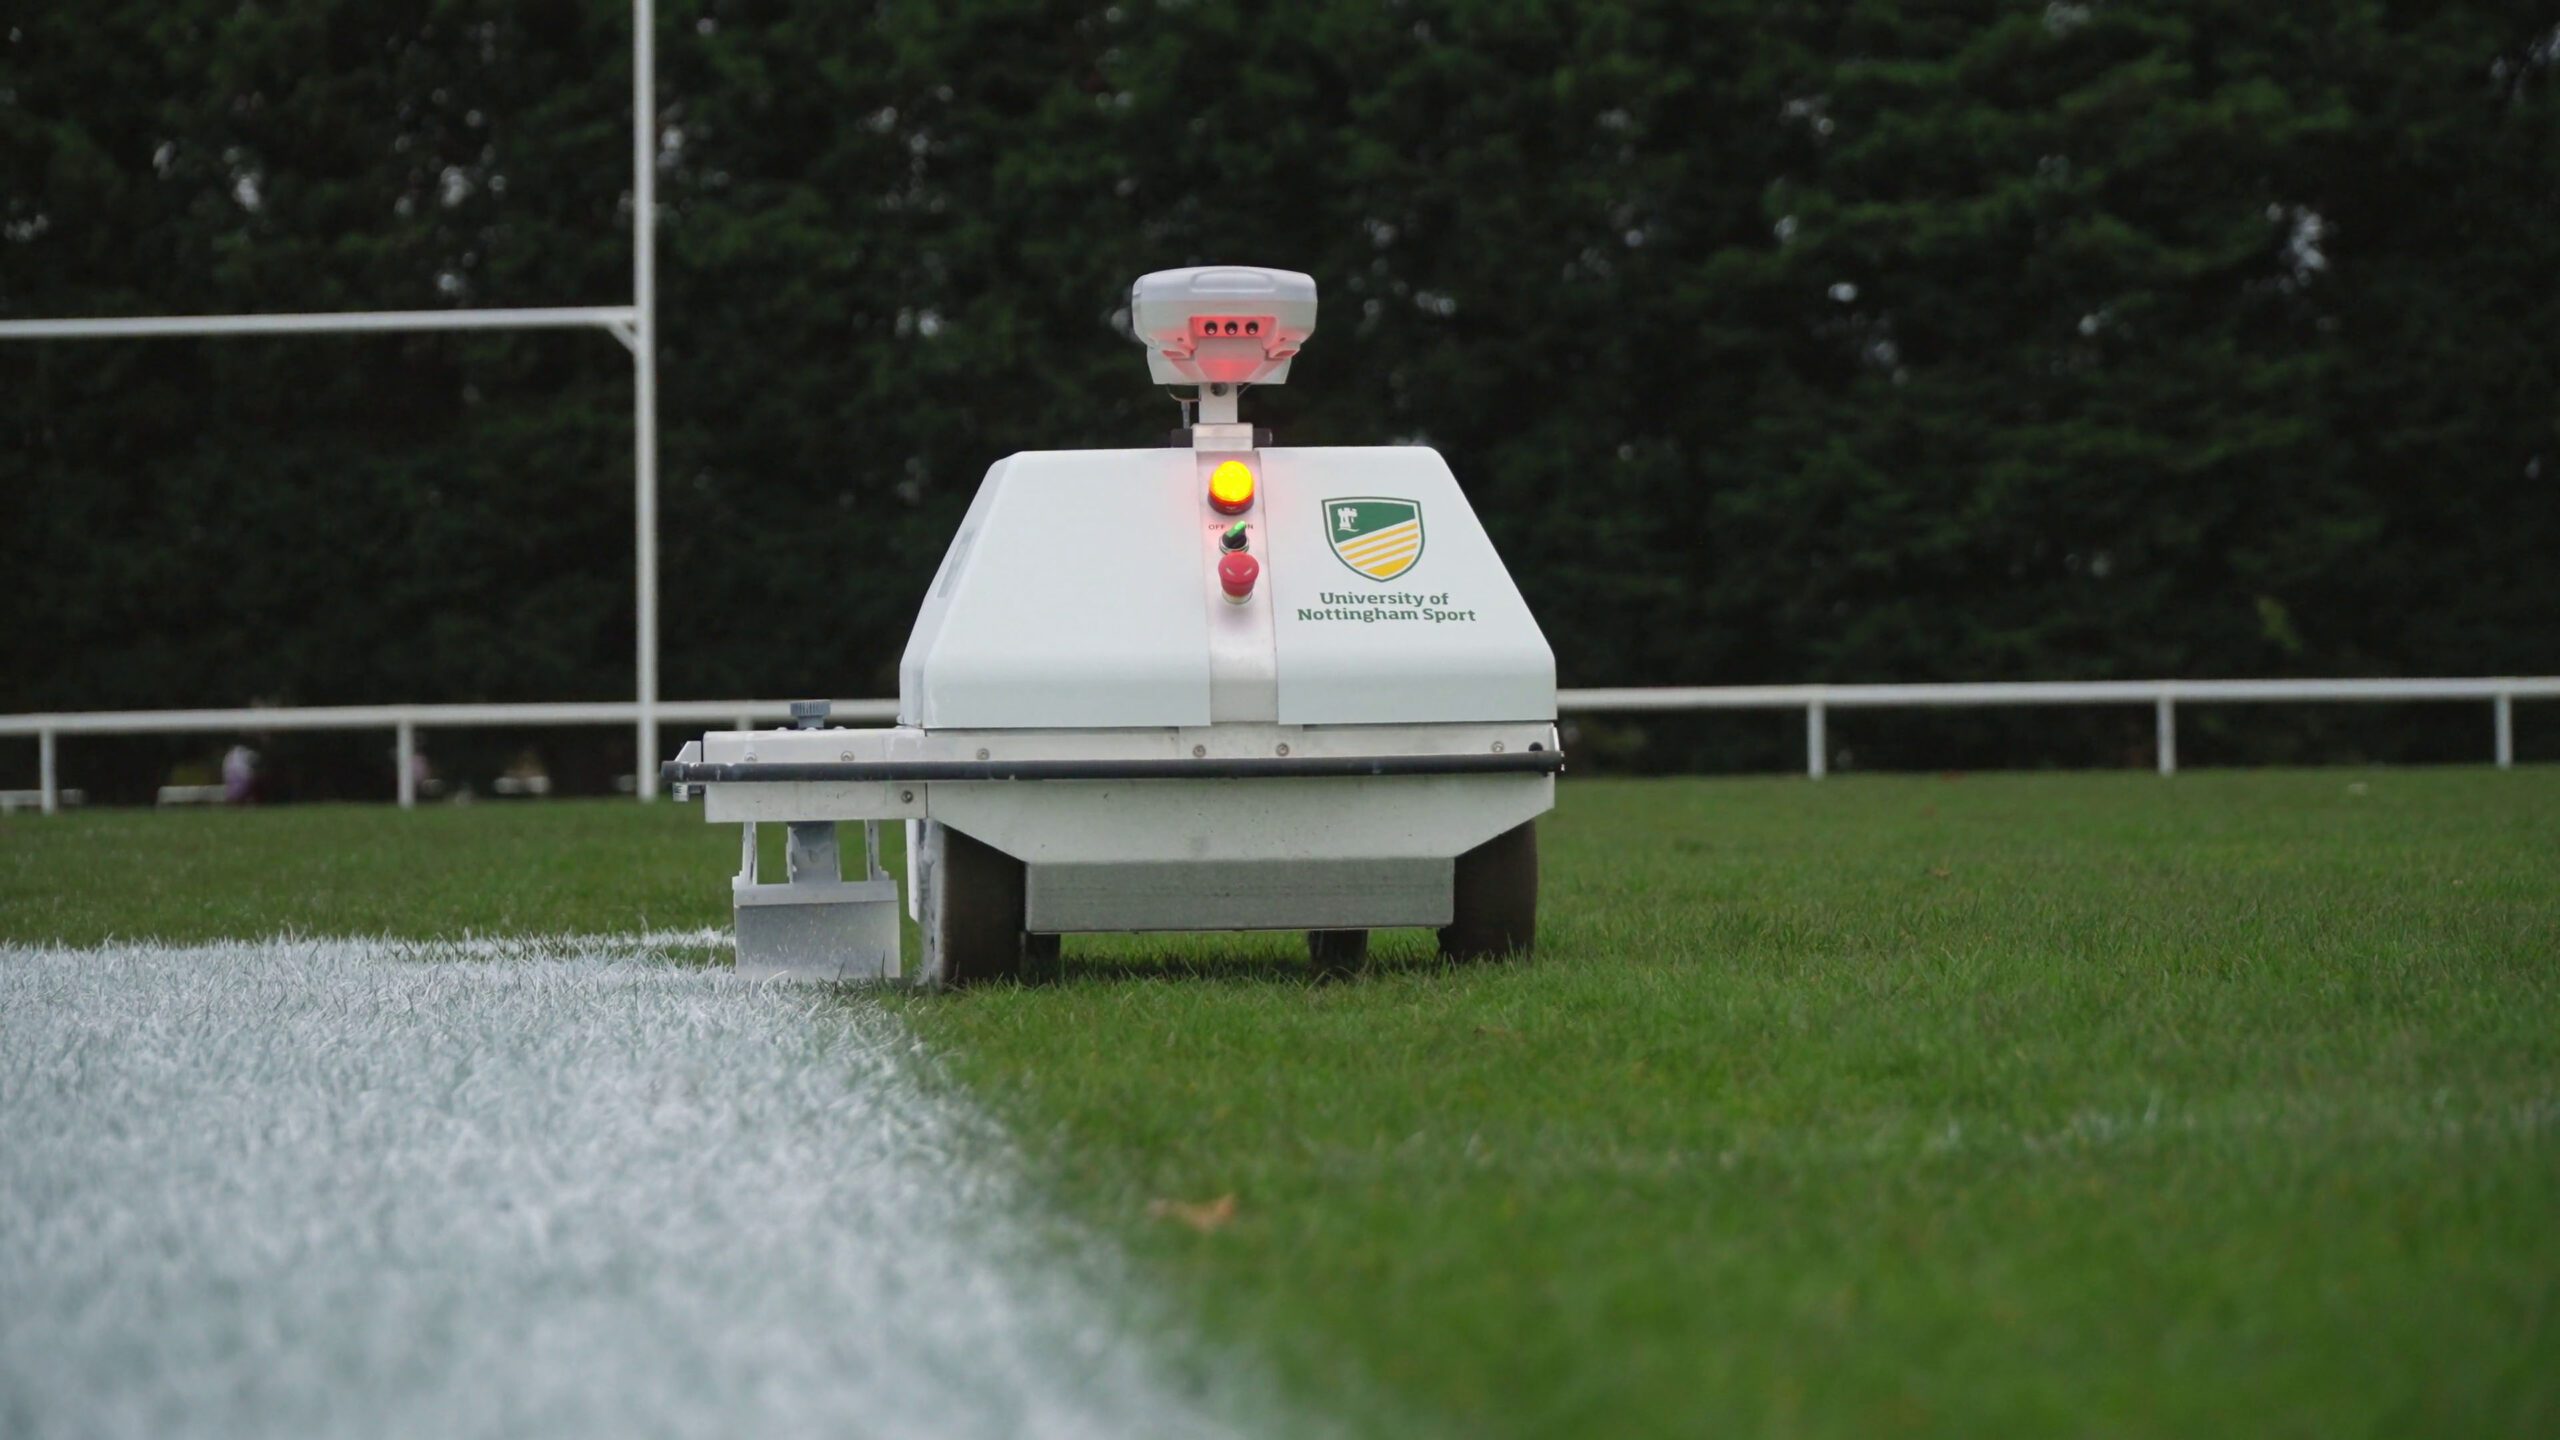 Autonomous line marking robot painting a field at university of nottingham